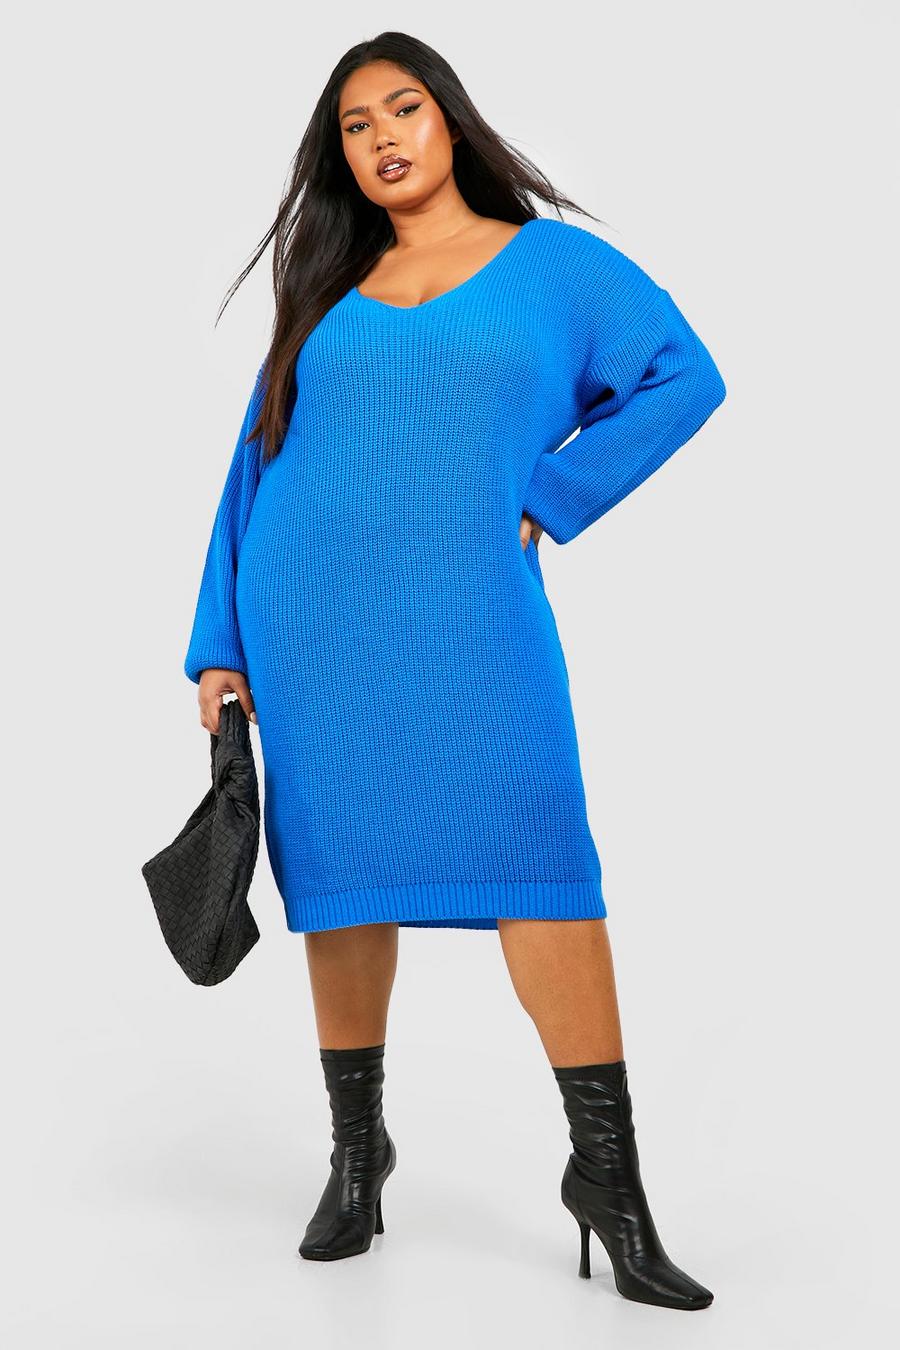 Bright blue שמלת מיני בסגנון סוודר עם צווארון וי מידות גדולות